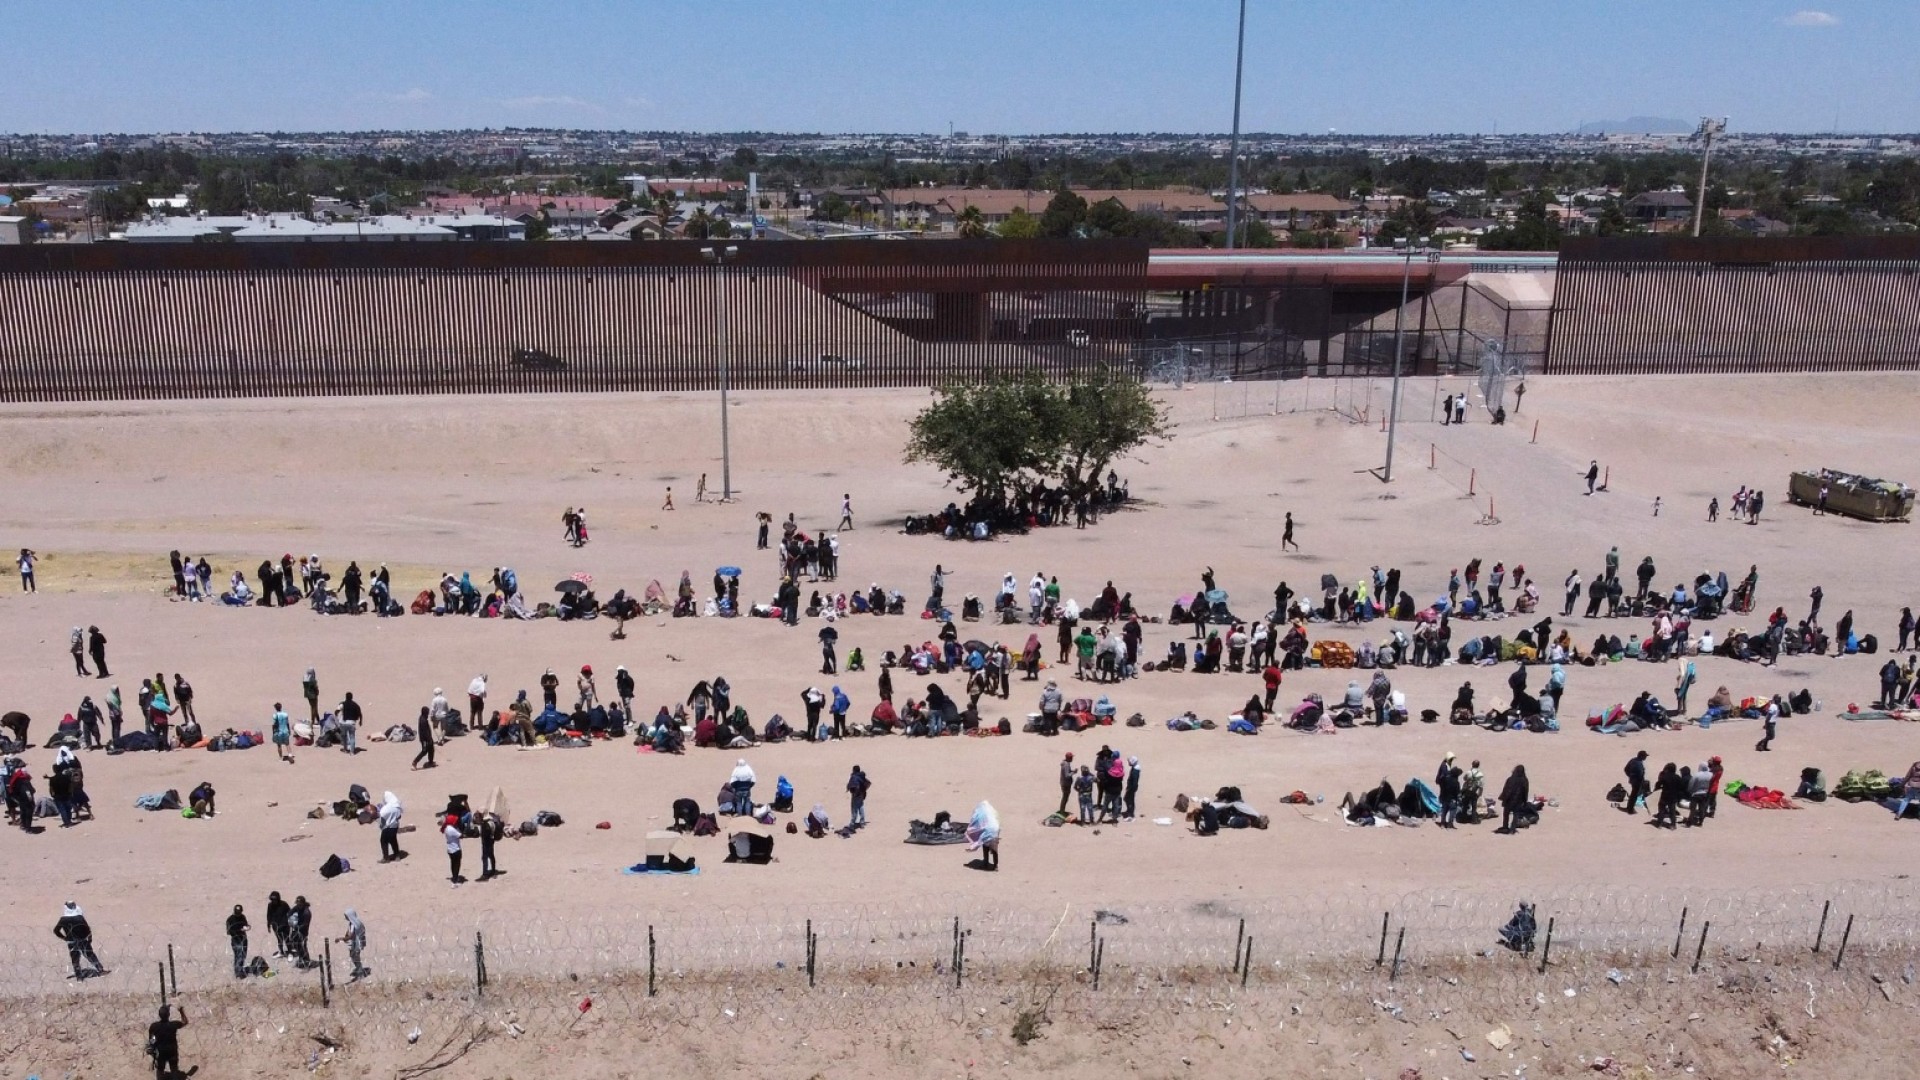 Border communities, Border Patrol brace for migrant surge as Title